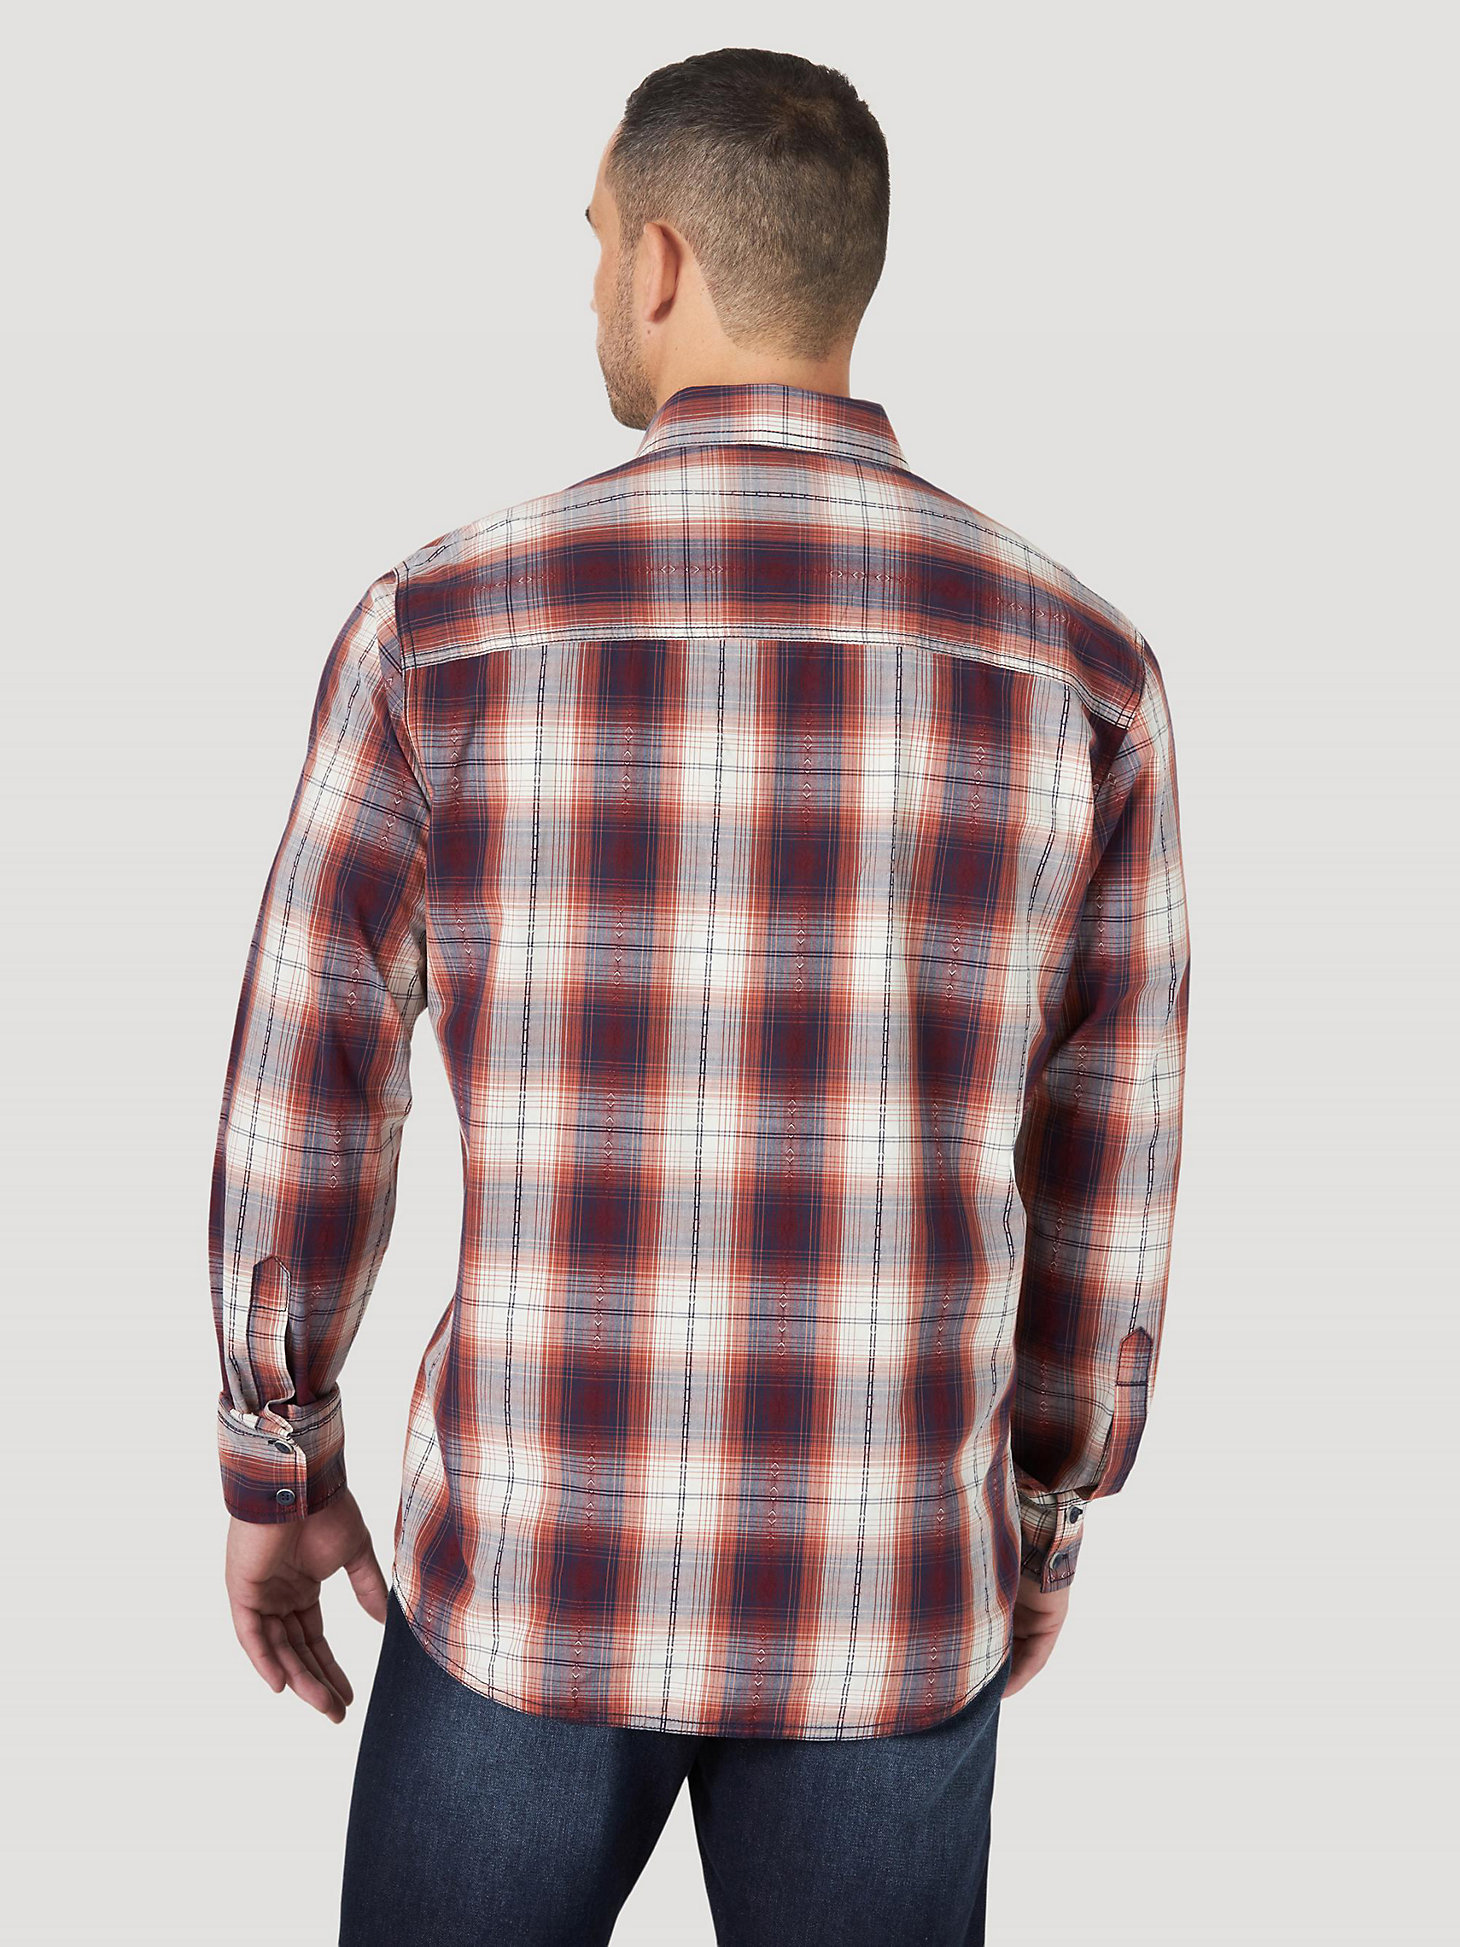 Men's Wrangler Retro® Long Sleeve Button-Down Plaid Shirt in Burgundy alternative view 1